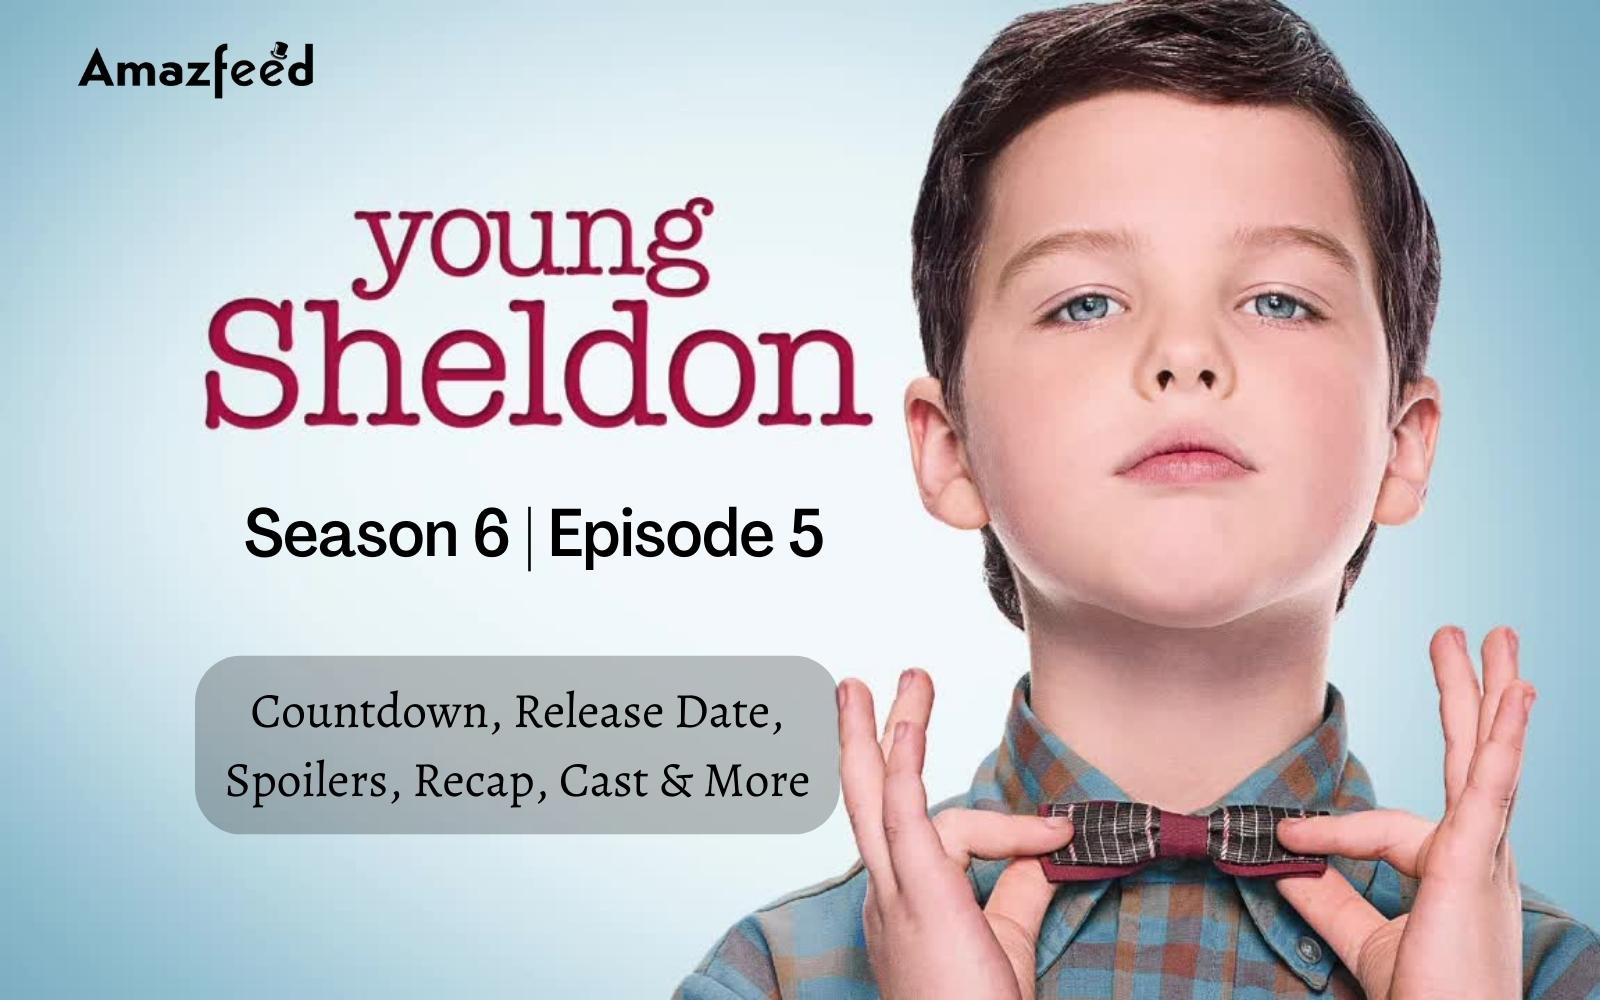 Young Sheldon Season 6 Episode 5 ⇒ Countdown, Release Date, Spoilers, Recap, Cast & News Updates